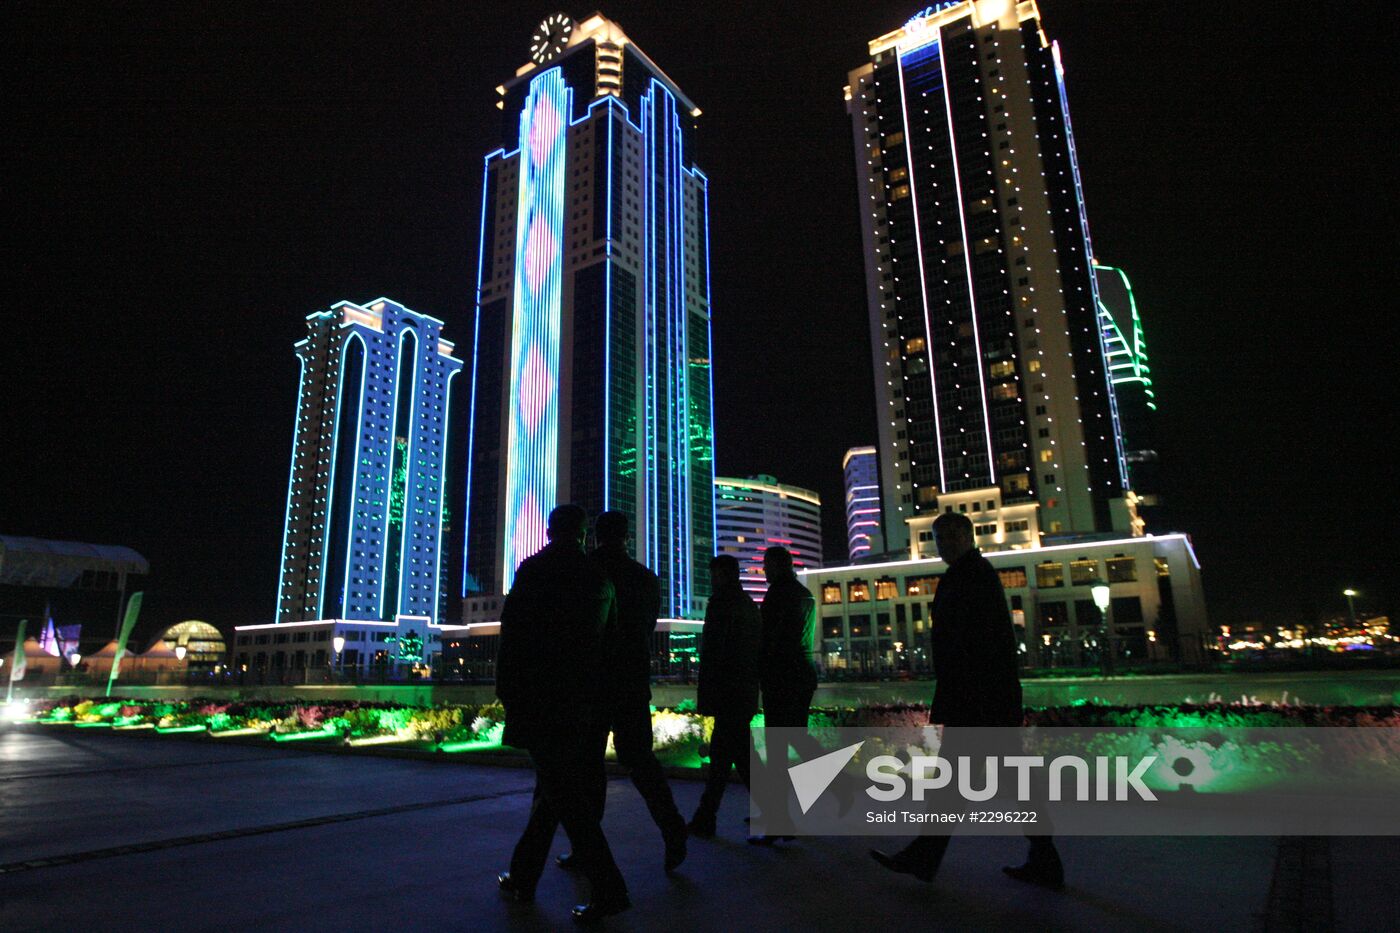 City Day celebrations in Grozny